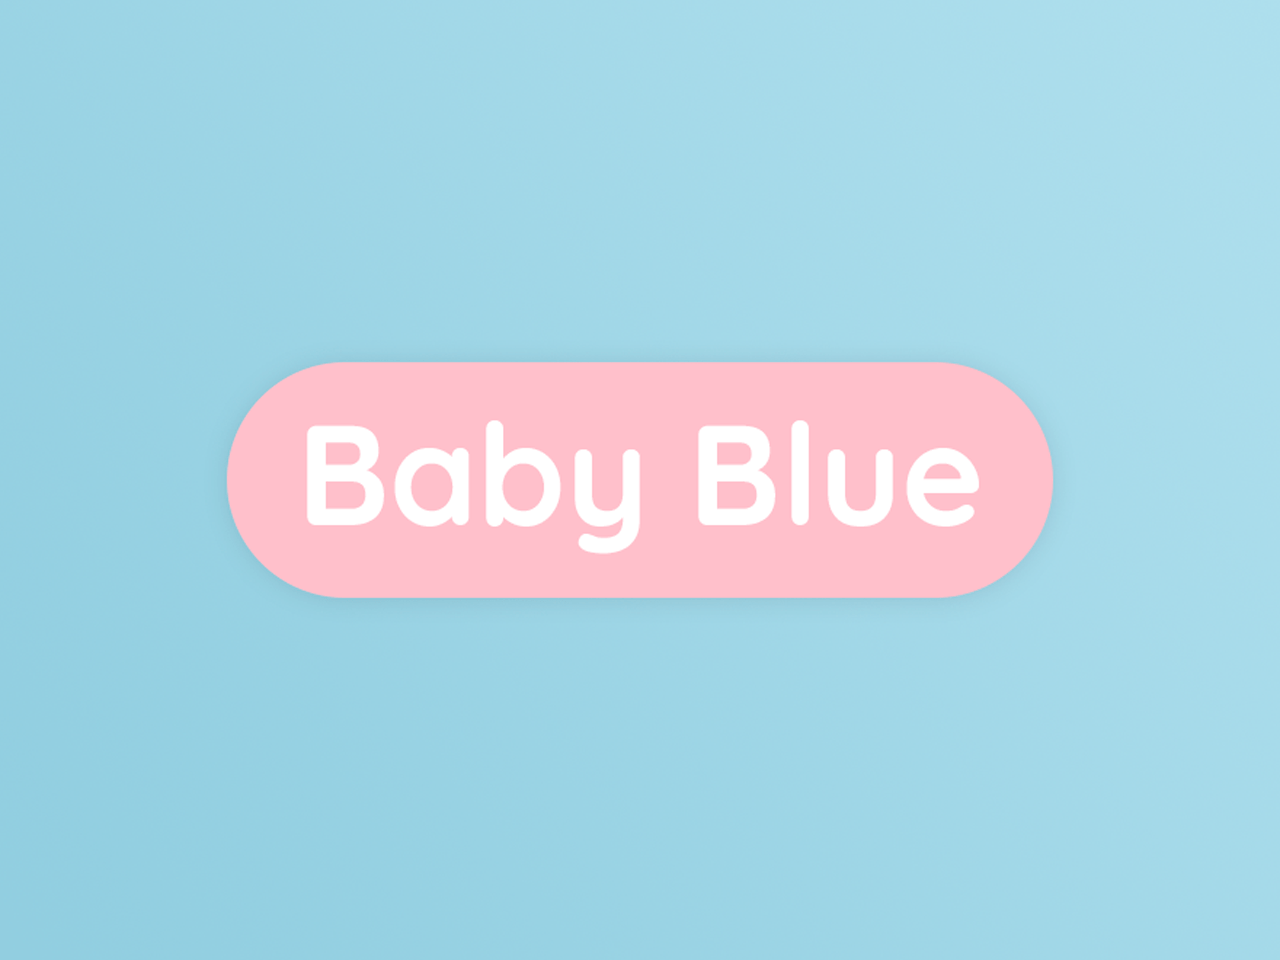 Baby blues adalah